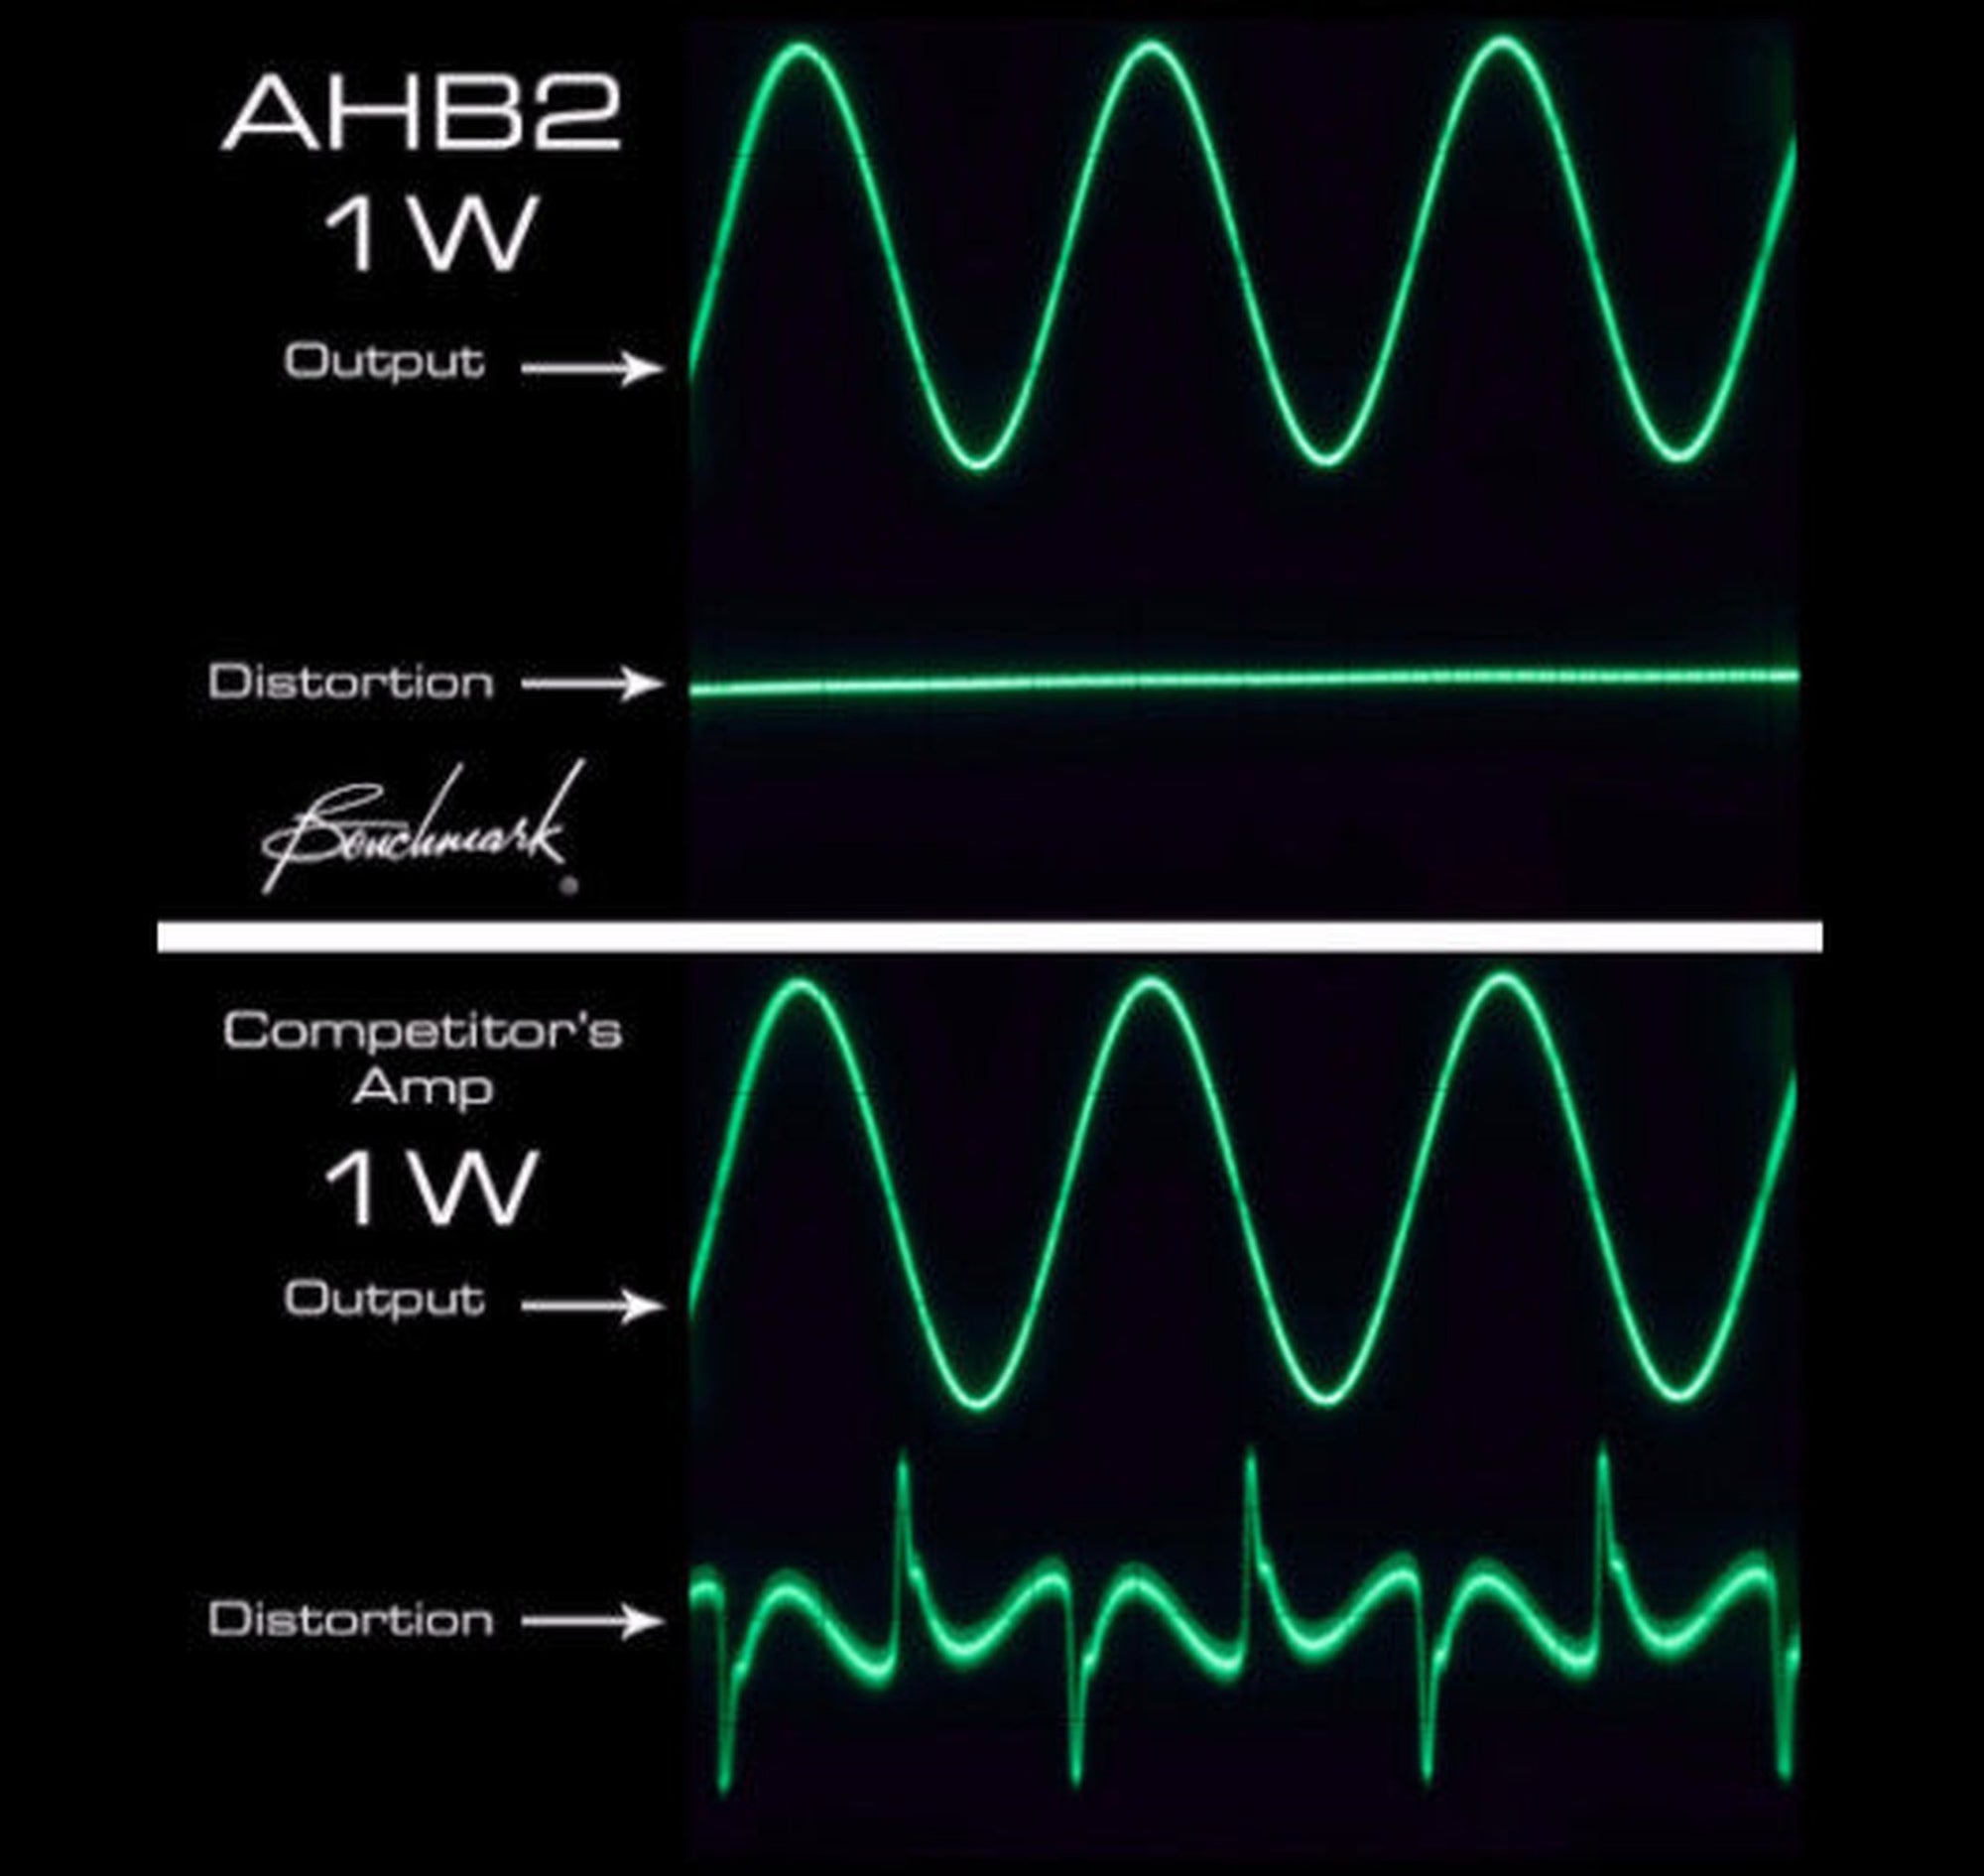 AHB2 Output Waveform at 1 Watt